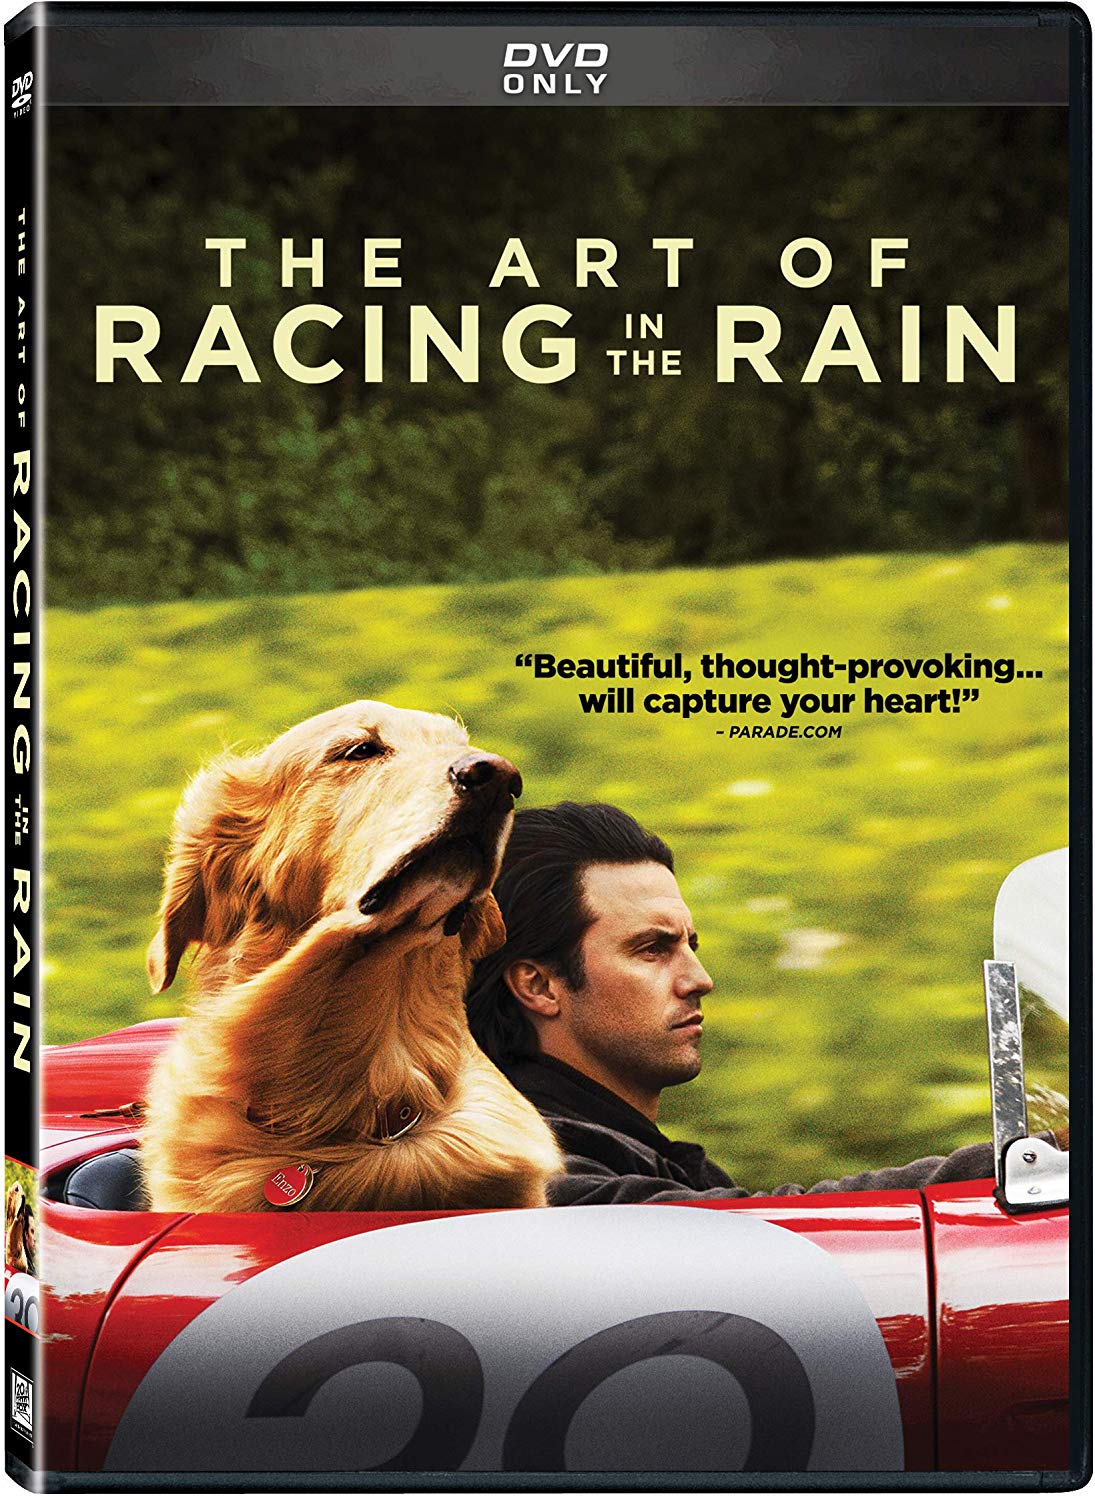 The Art of Racing in the Rain on DVD